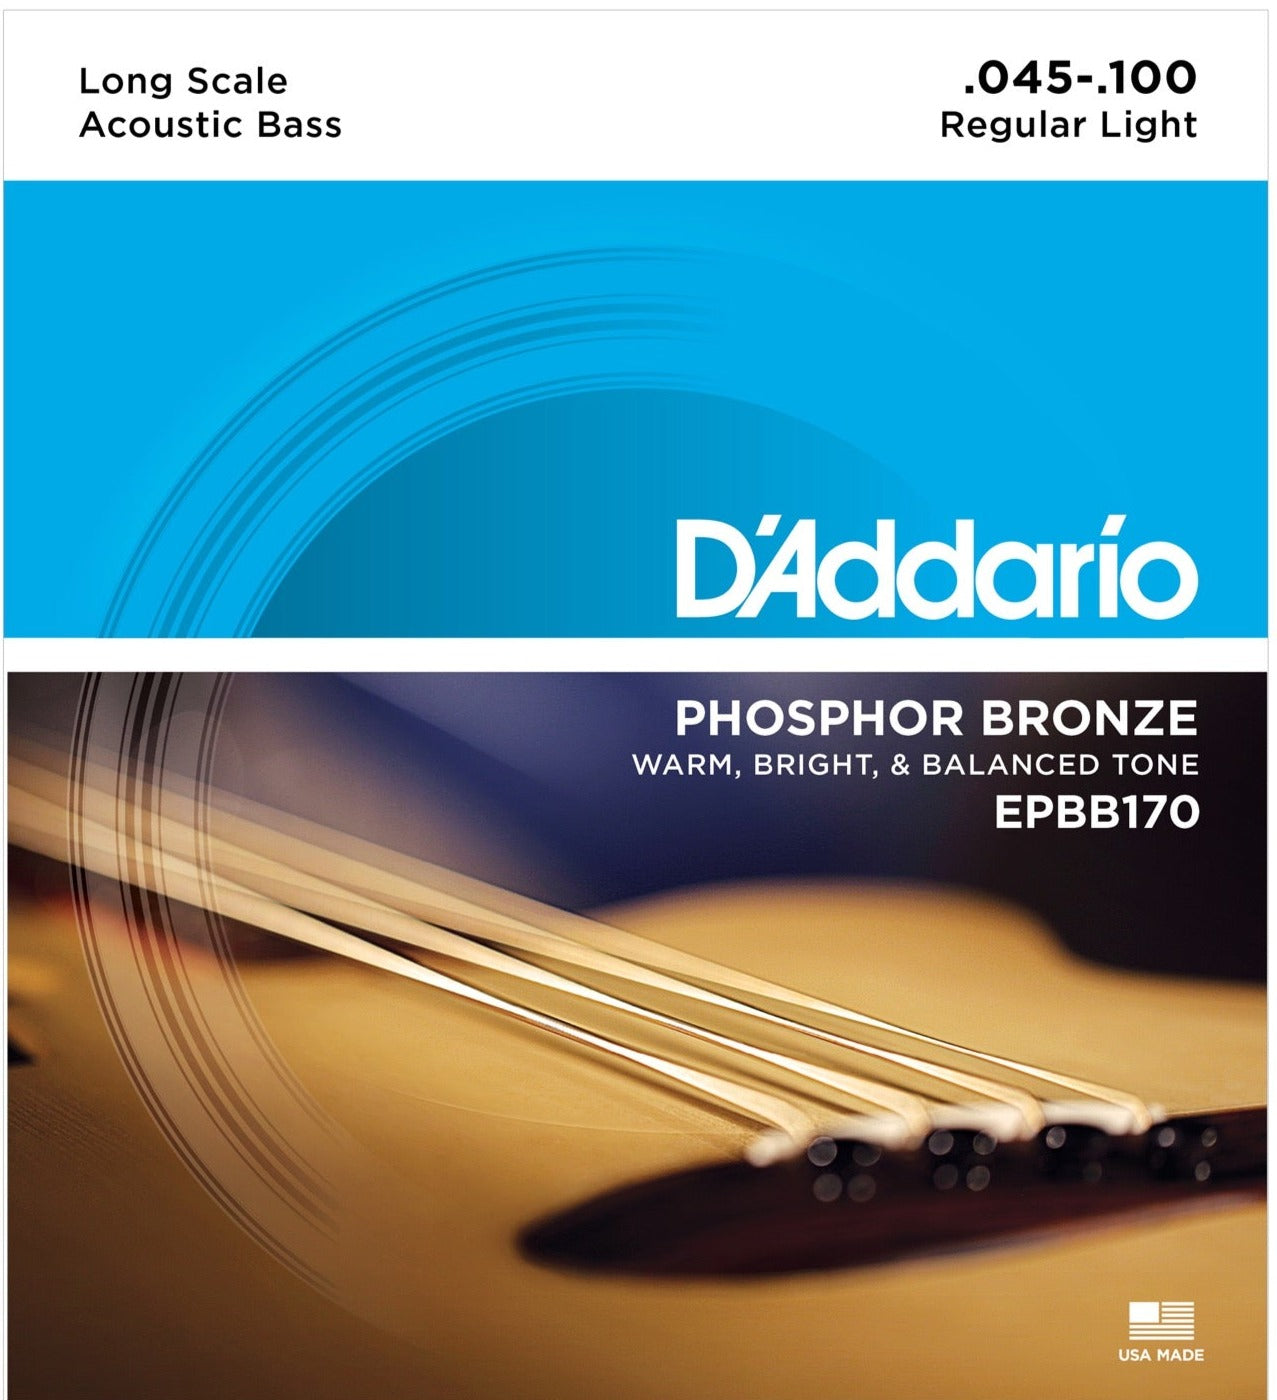 D'Addario - Regular Light Long Scale Acoustic Bass (4 string)